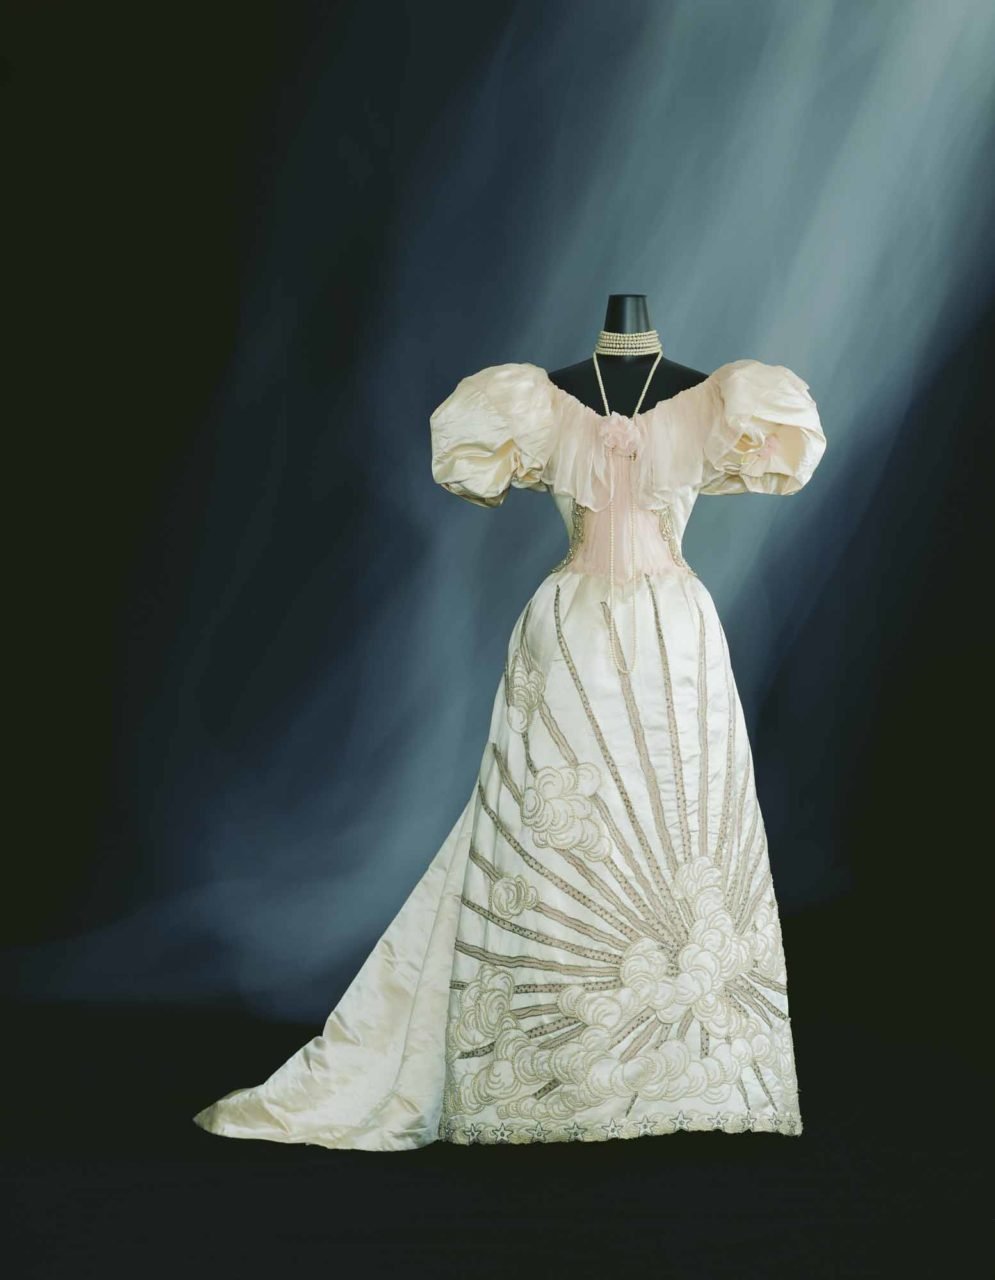 Emma Stone Embodies Flapper-Era Glamour at the Met Gala 2022